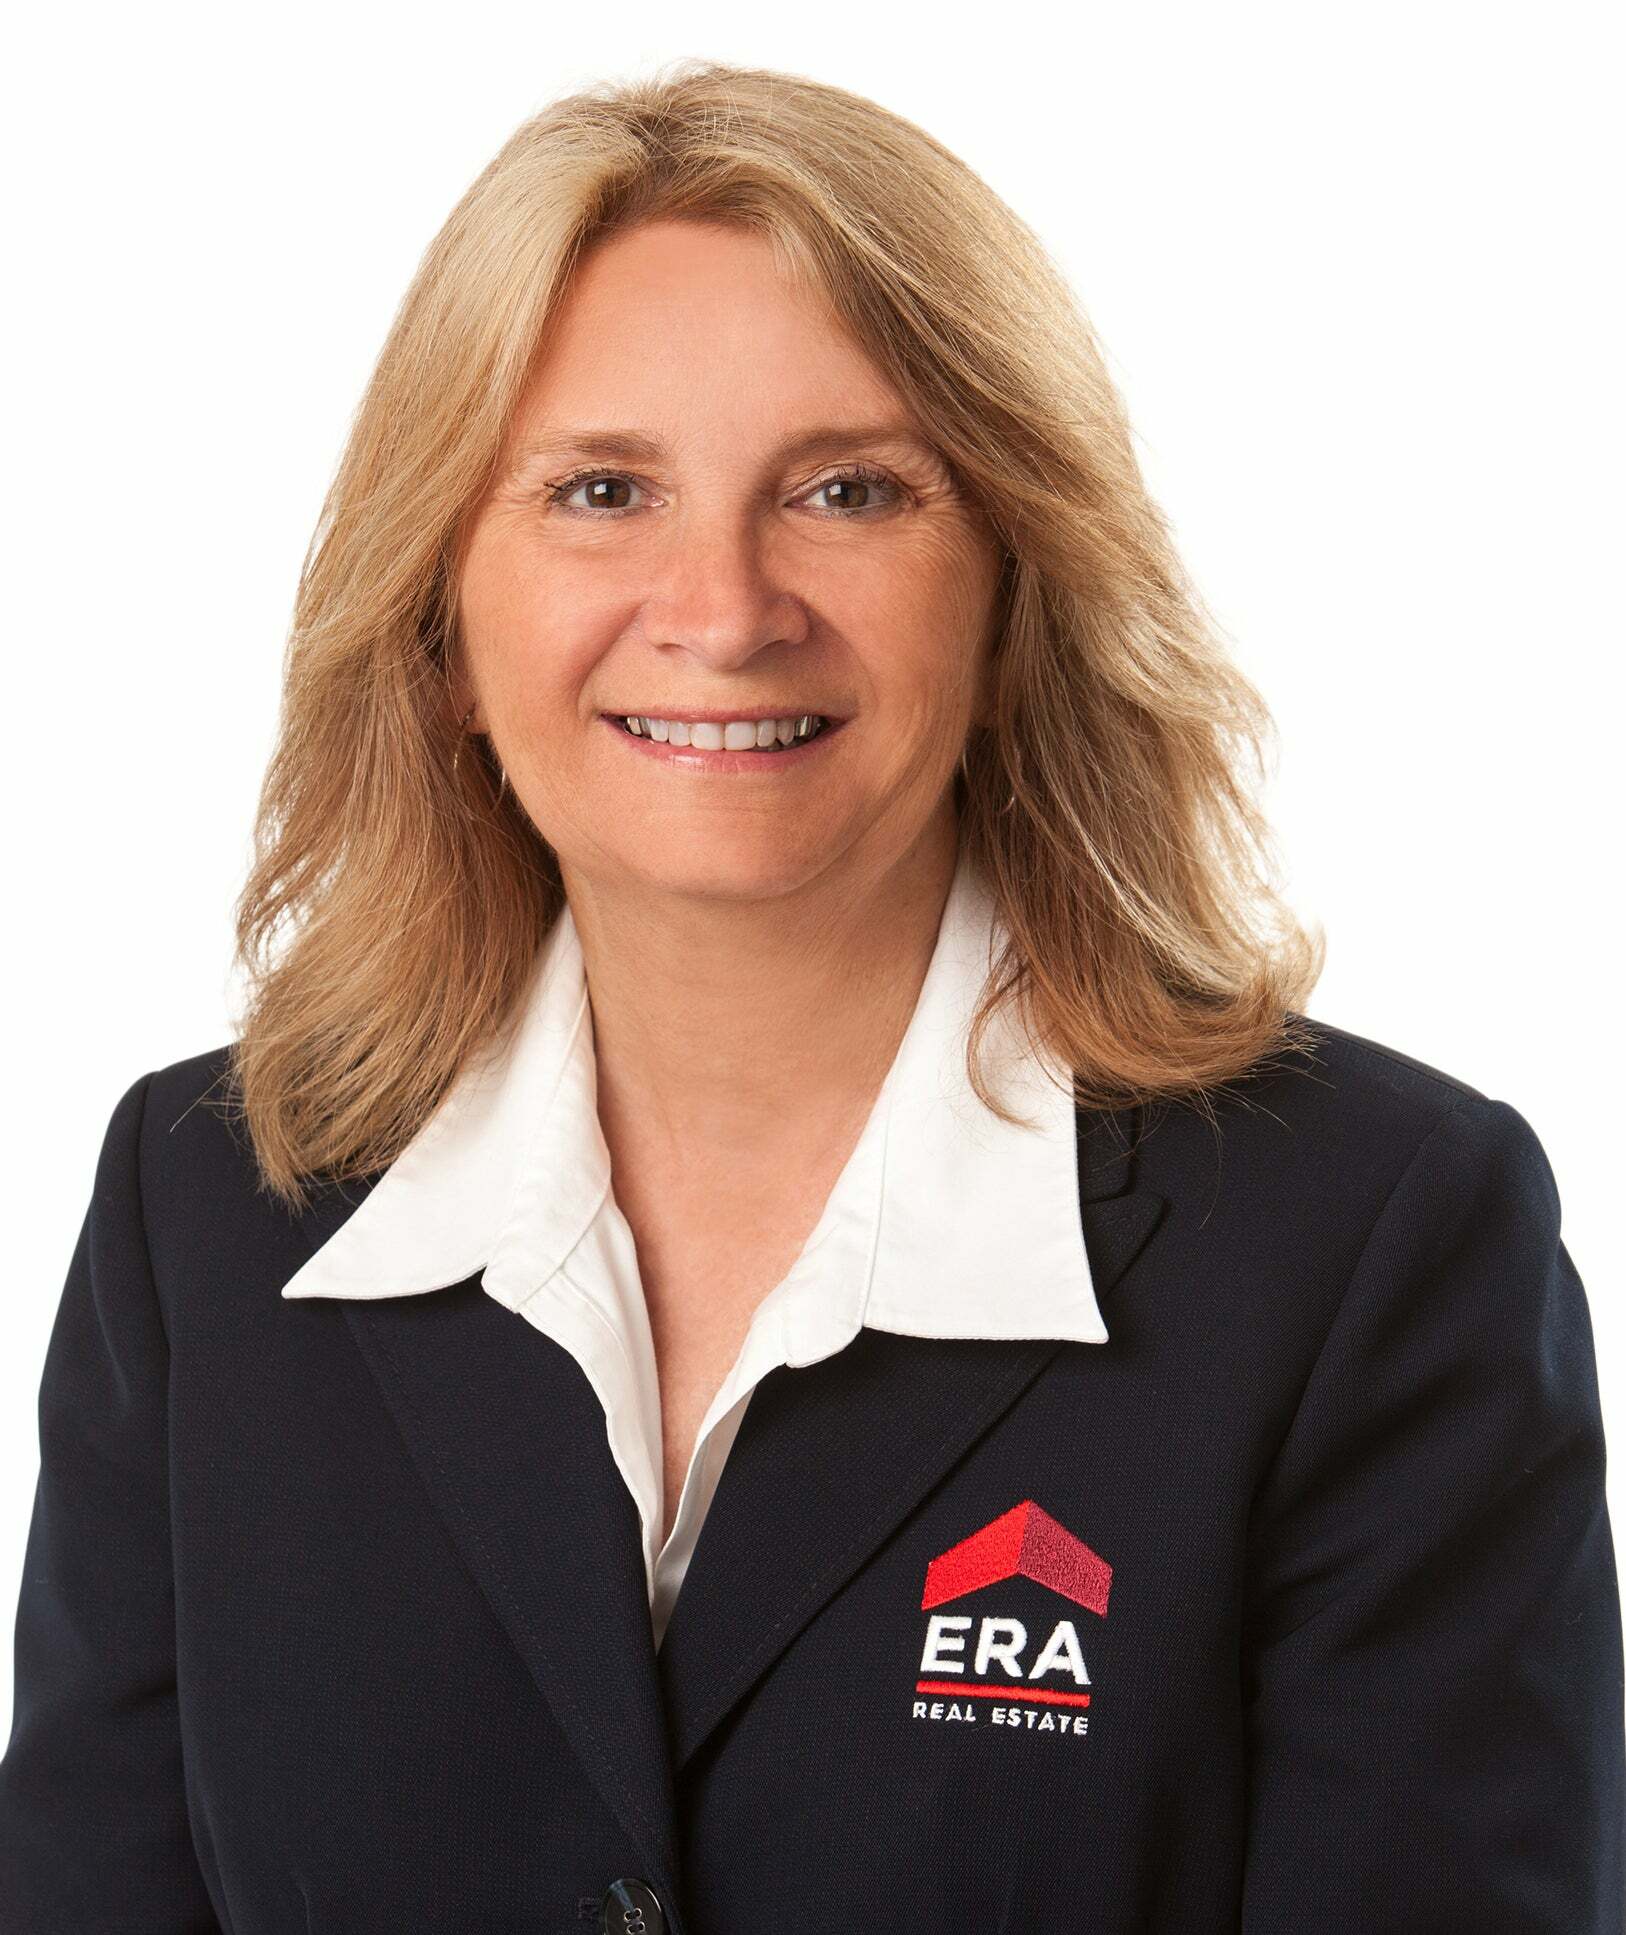 Cindy Baumeyer, Real Estate Salesperson in Newburgh, ERA First Advantage Realty, Inc.